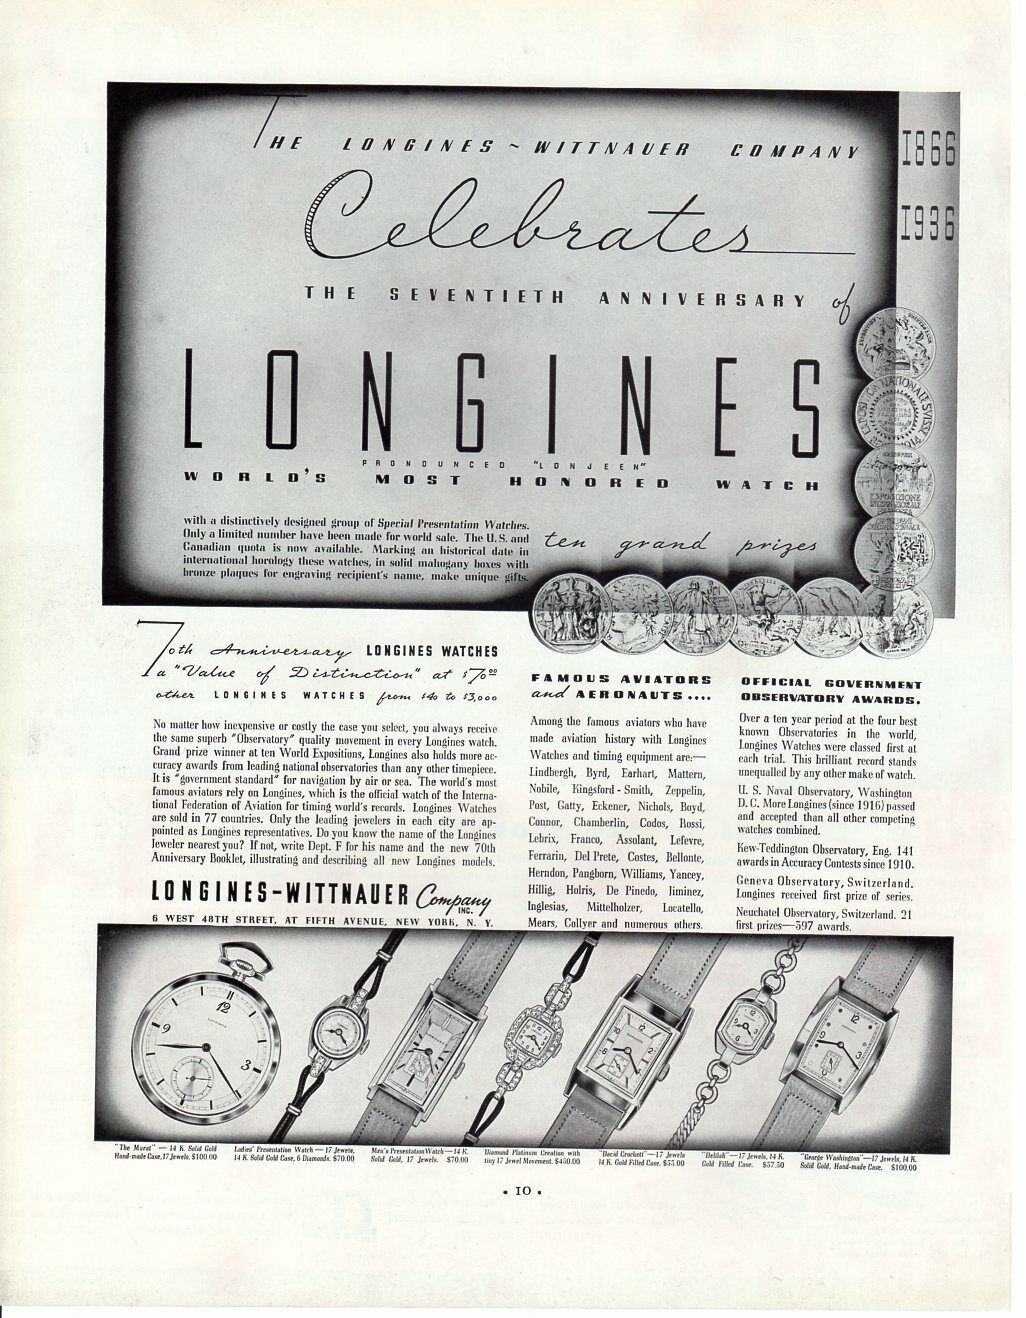 1936 Vintage print ad Fashion Longines Whittnauer Watch ad 1866 - 1936 6 styles